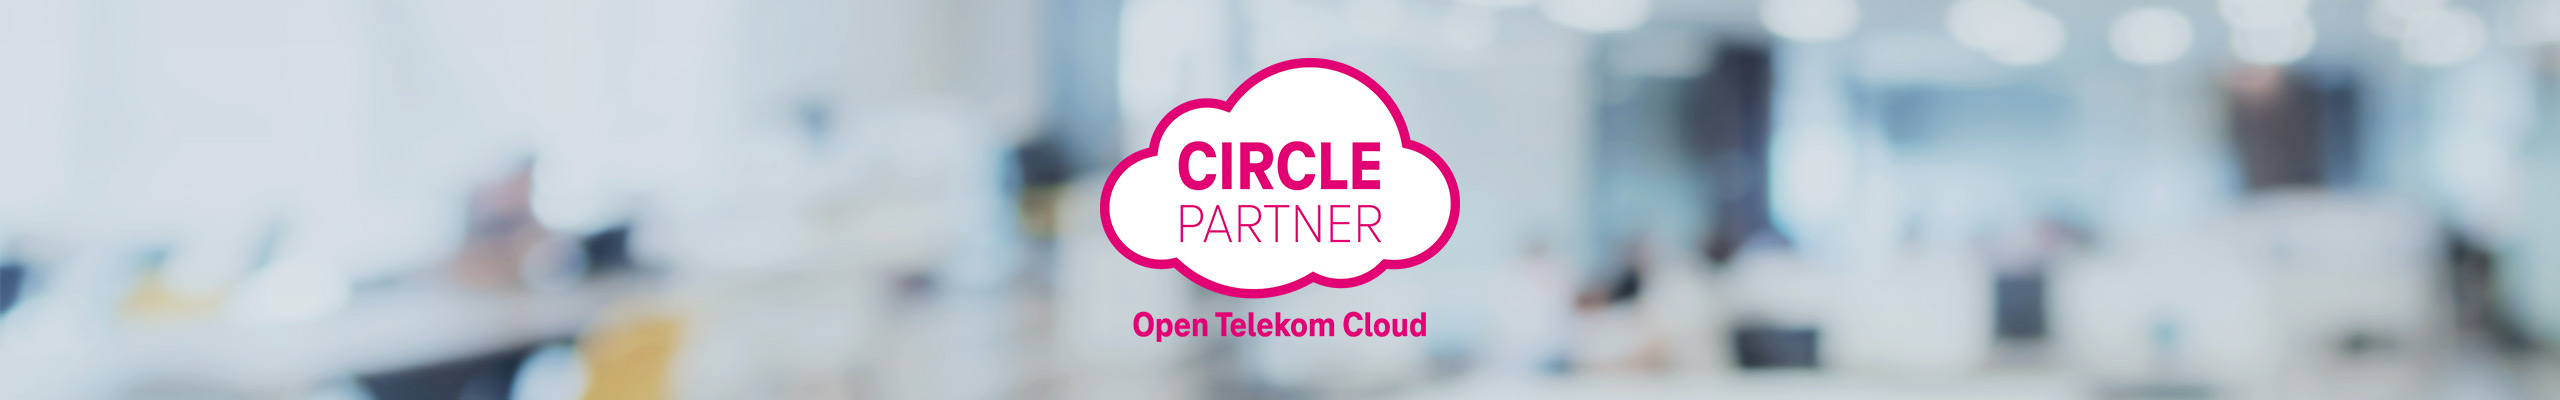 Circle Partners logo